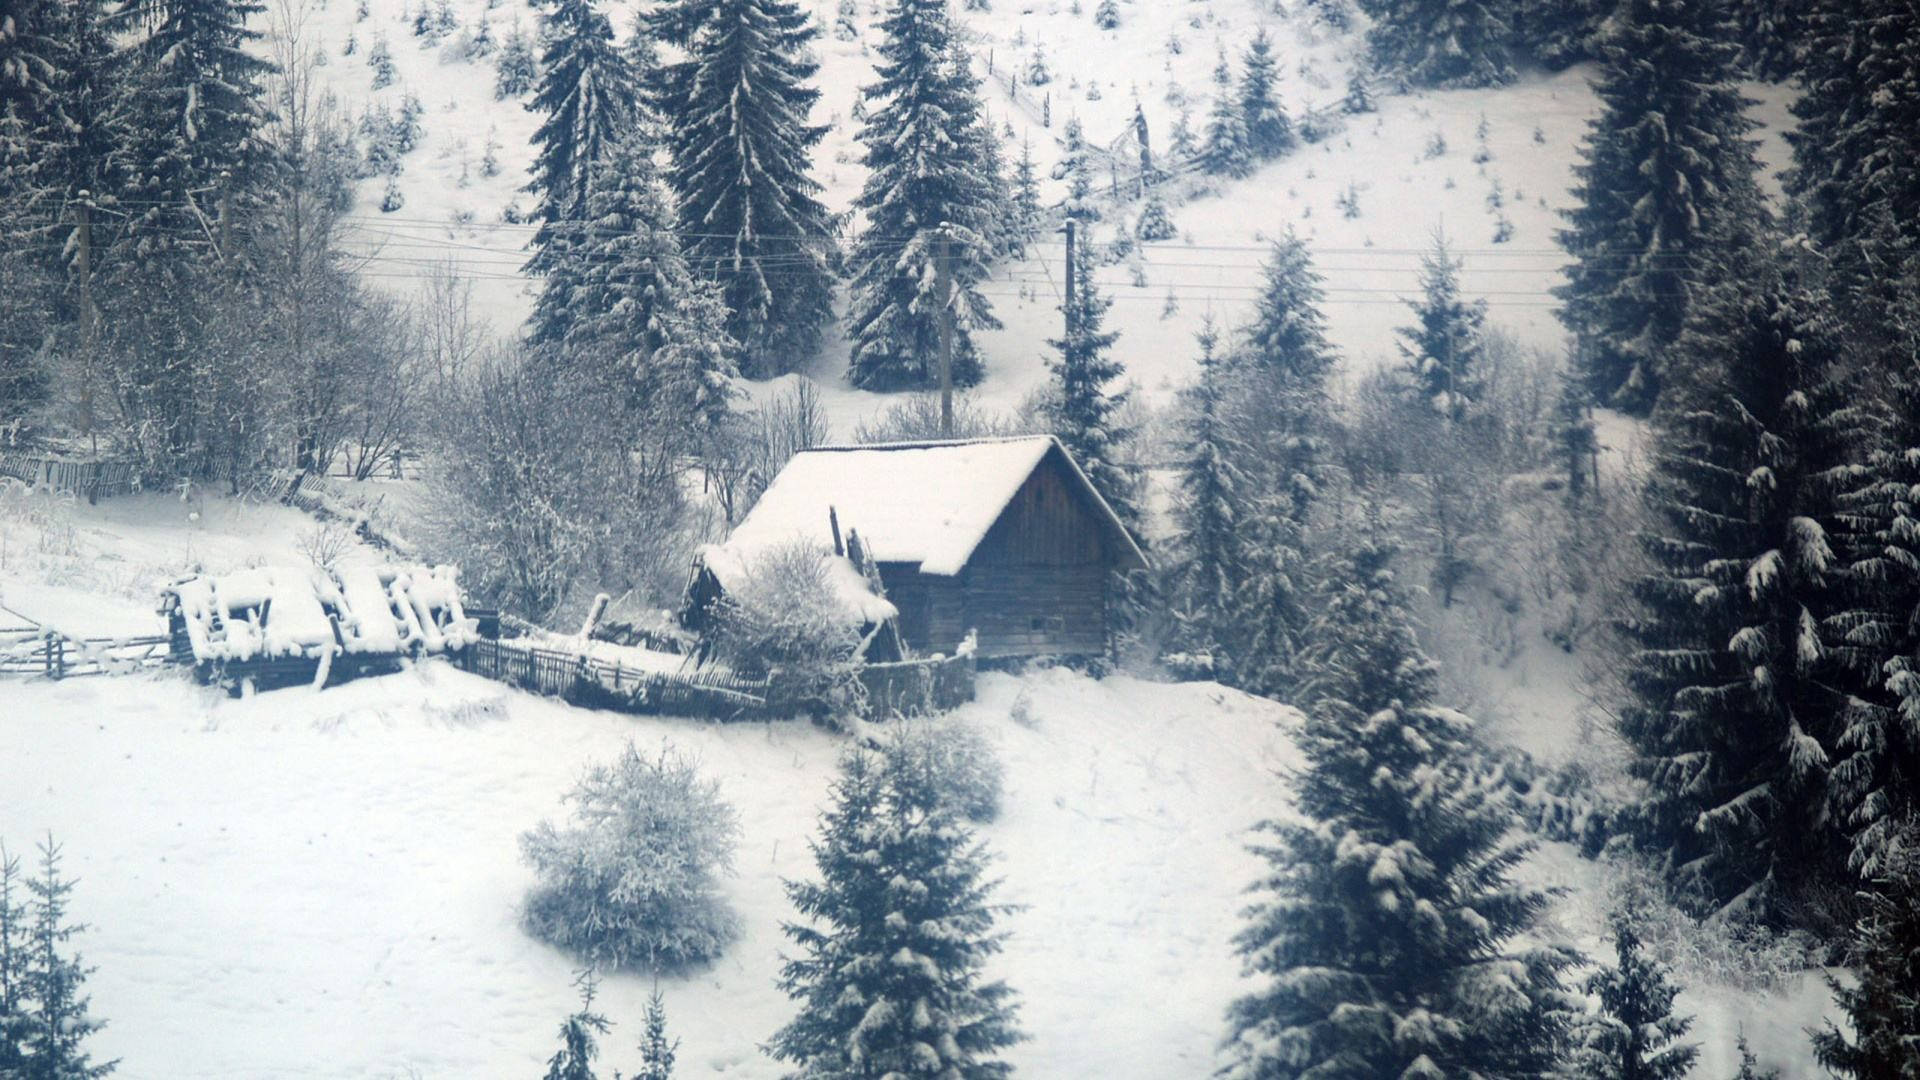 Caption: Breathtaking Winter Cabin Display In High Definition